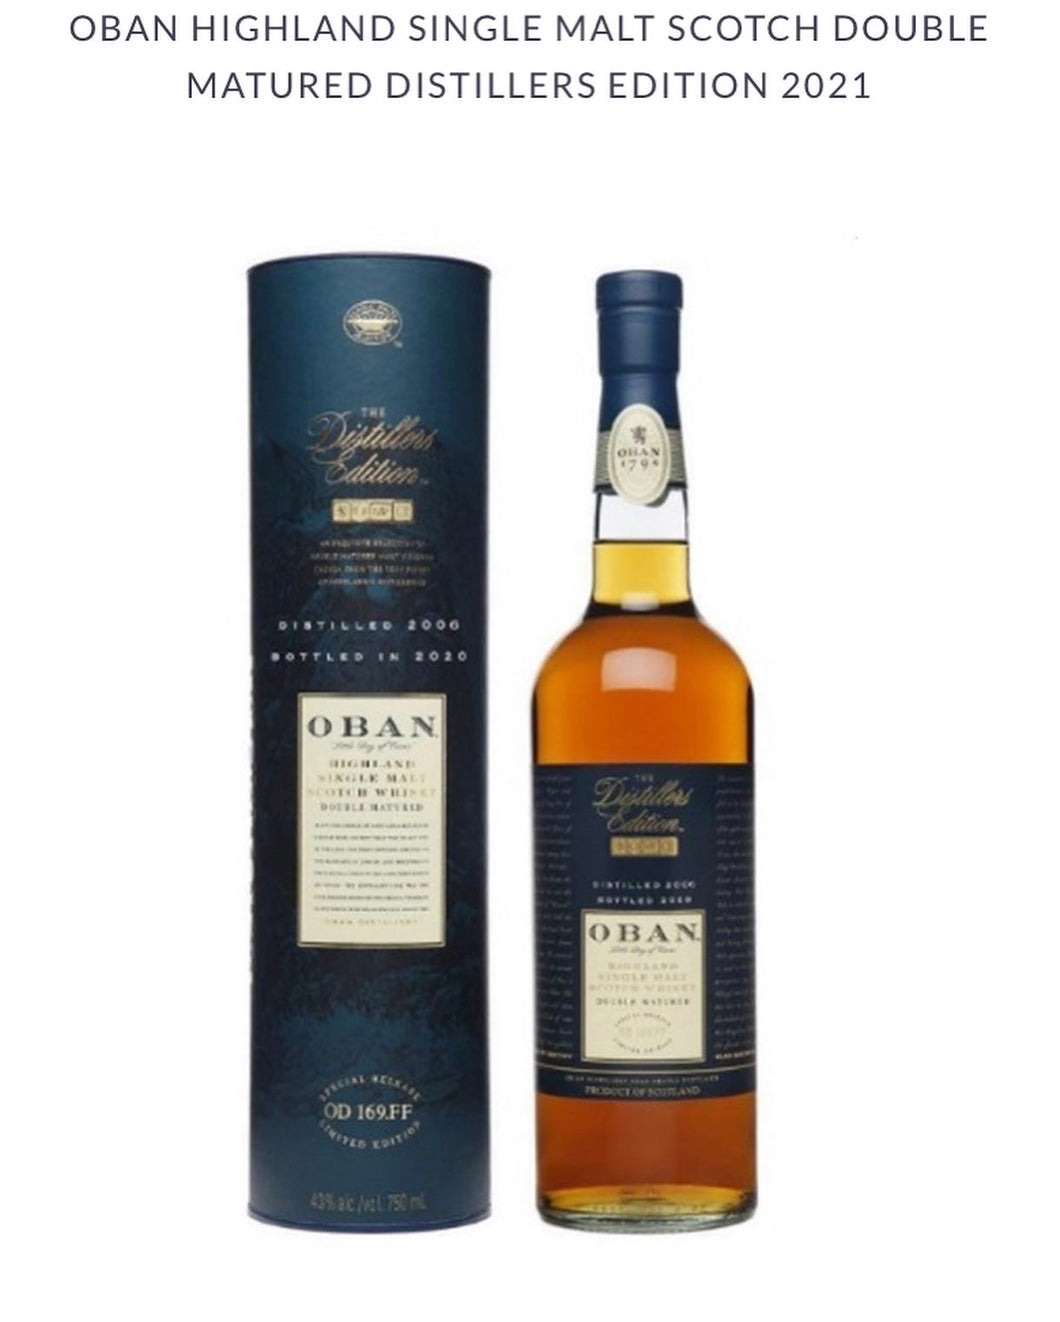 Oban Highland Single Malt Scotch Double Matured Distillers Edition 2021